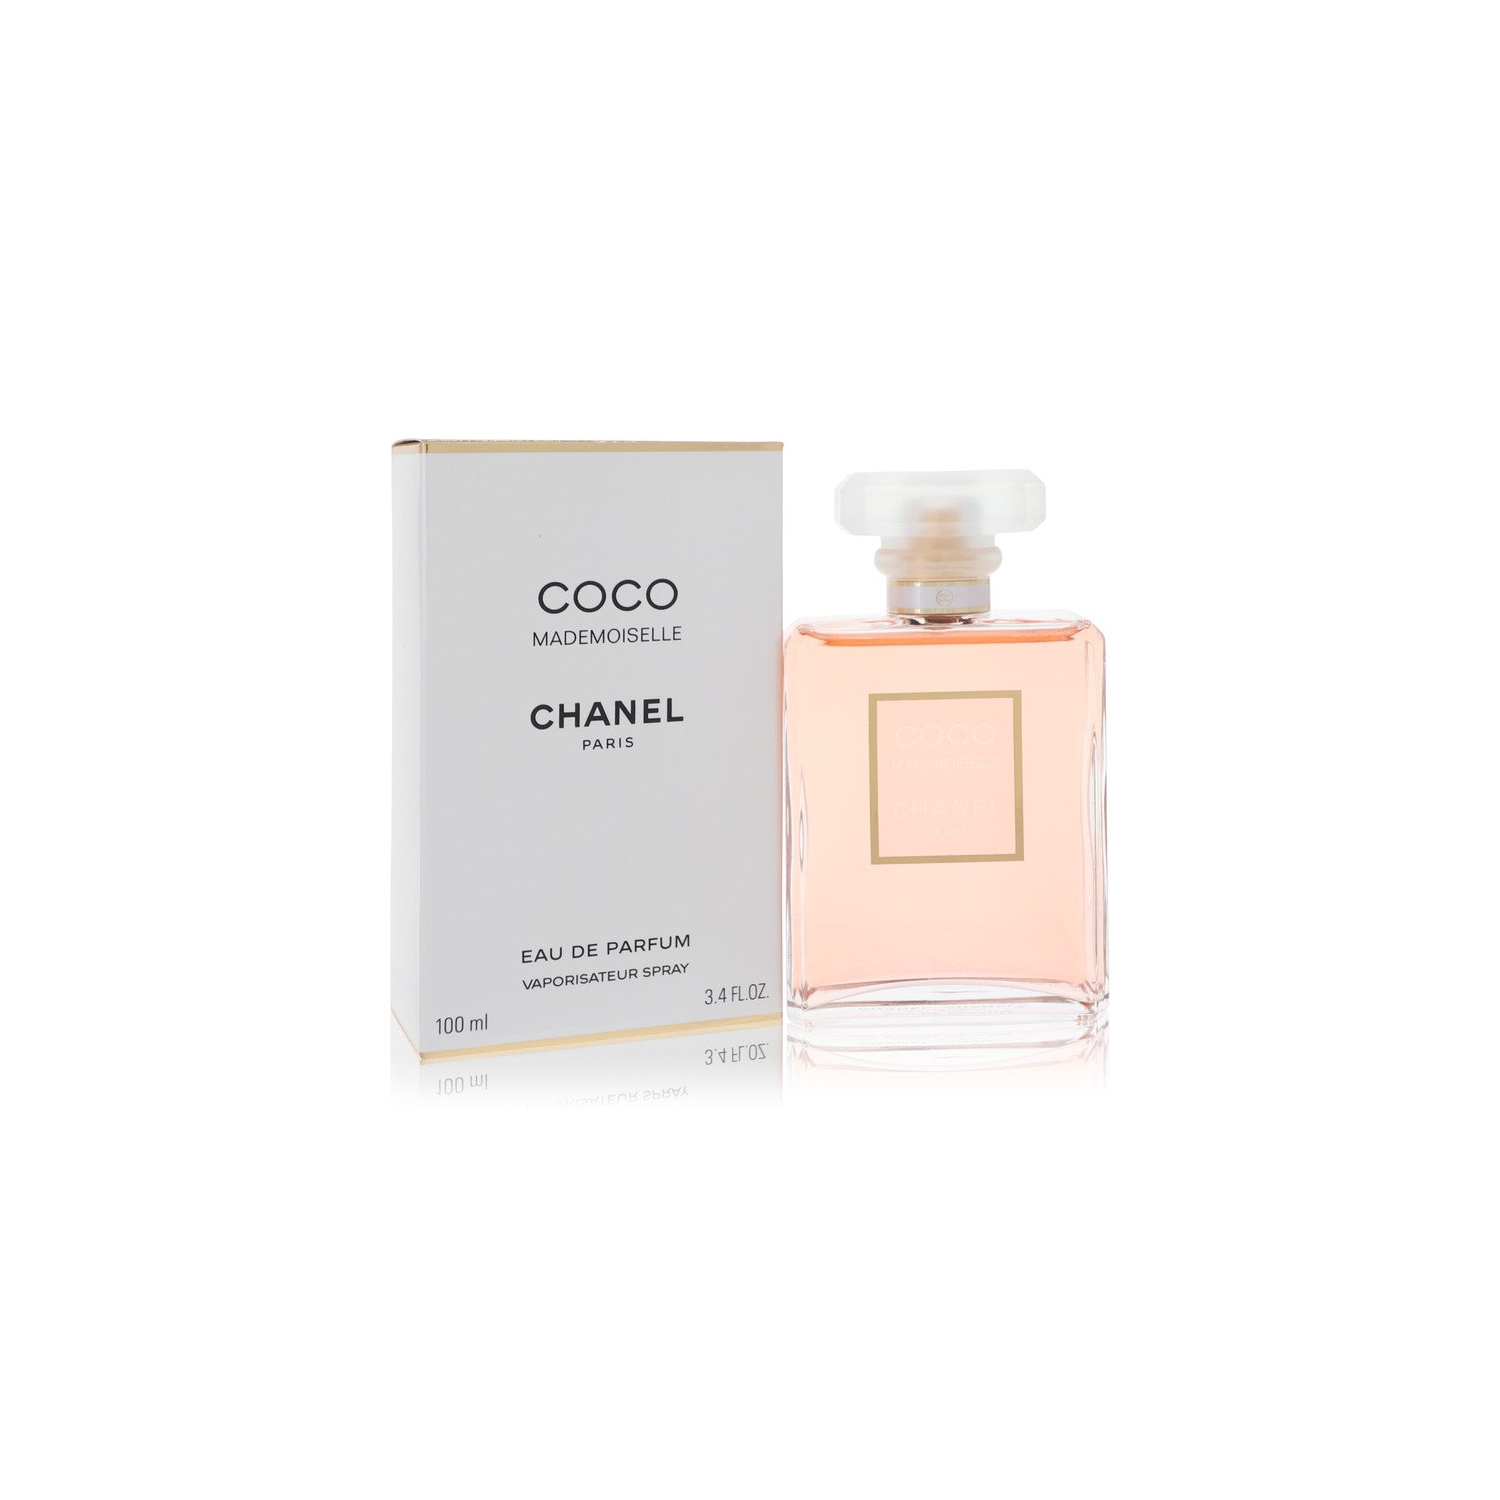 COCO MADEMOISELLE by Chanel Eau De Parfum Spray 3.4 oz